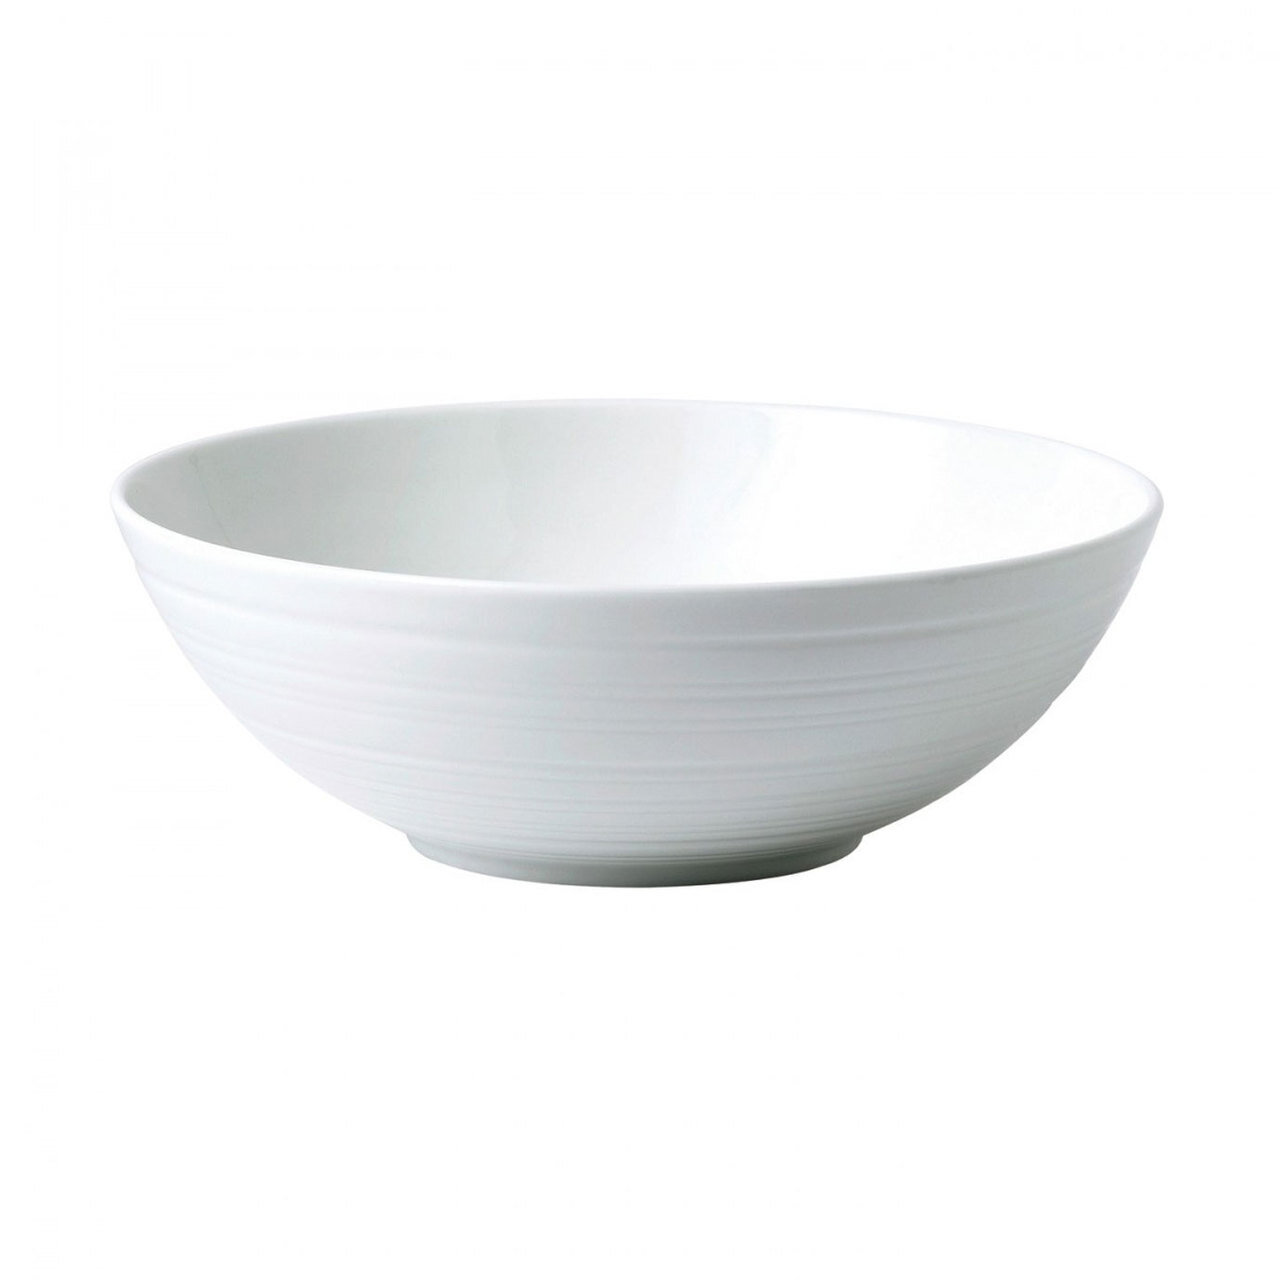 Wedgwood Jasper Conran White Strata Cereal Bowl 6.7 Inch